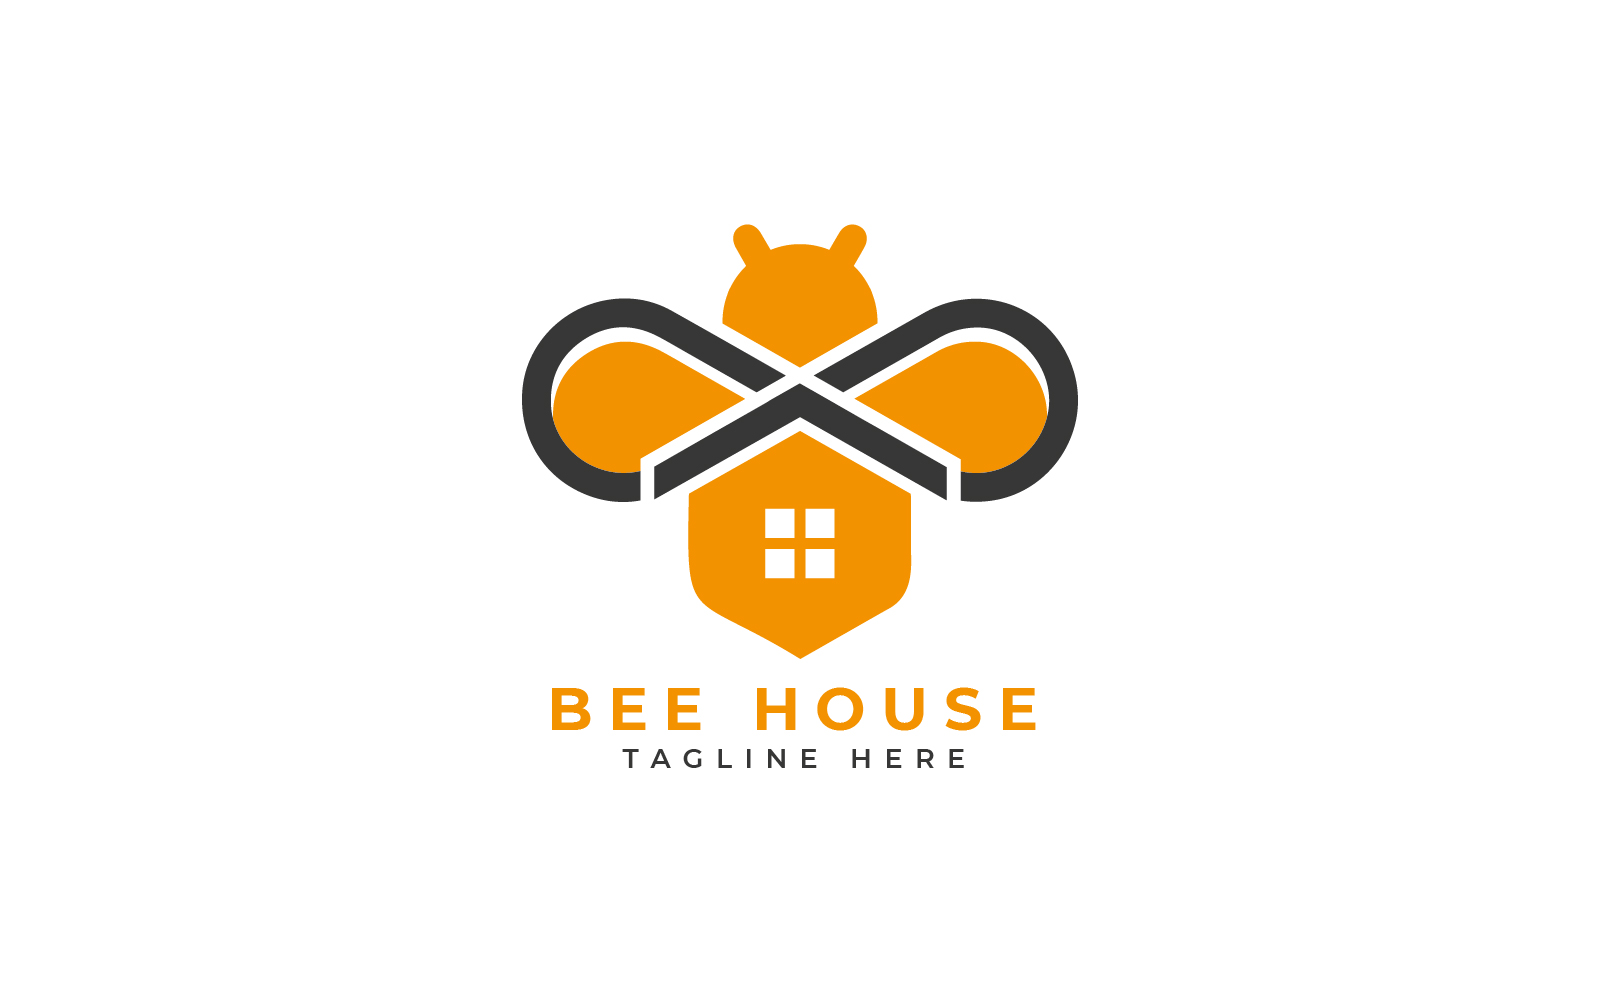 bee house logo design template